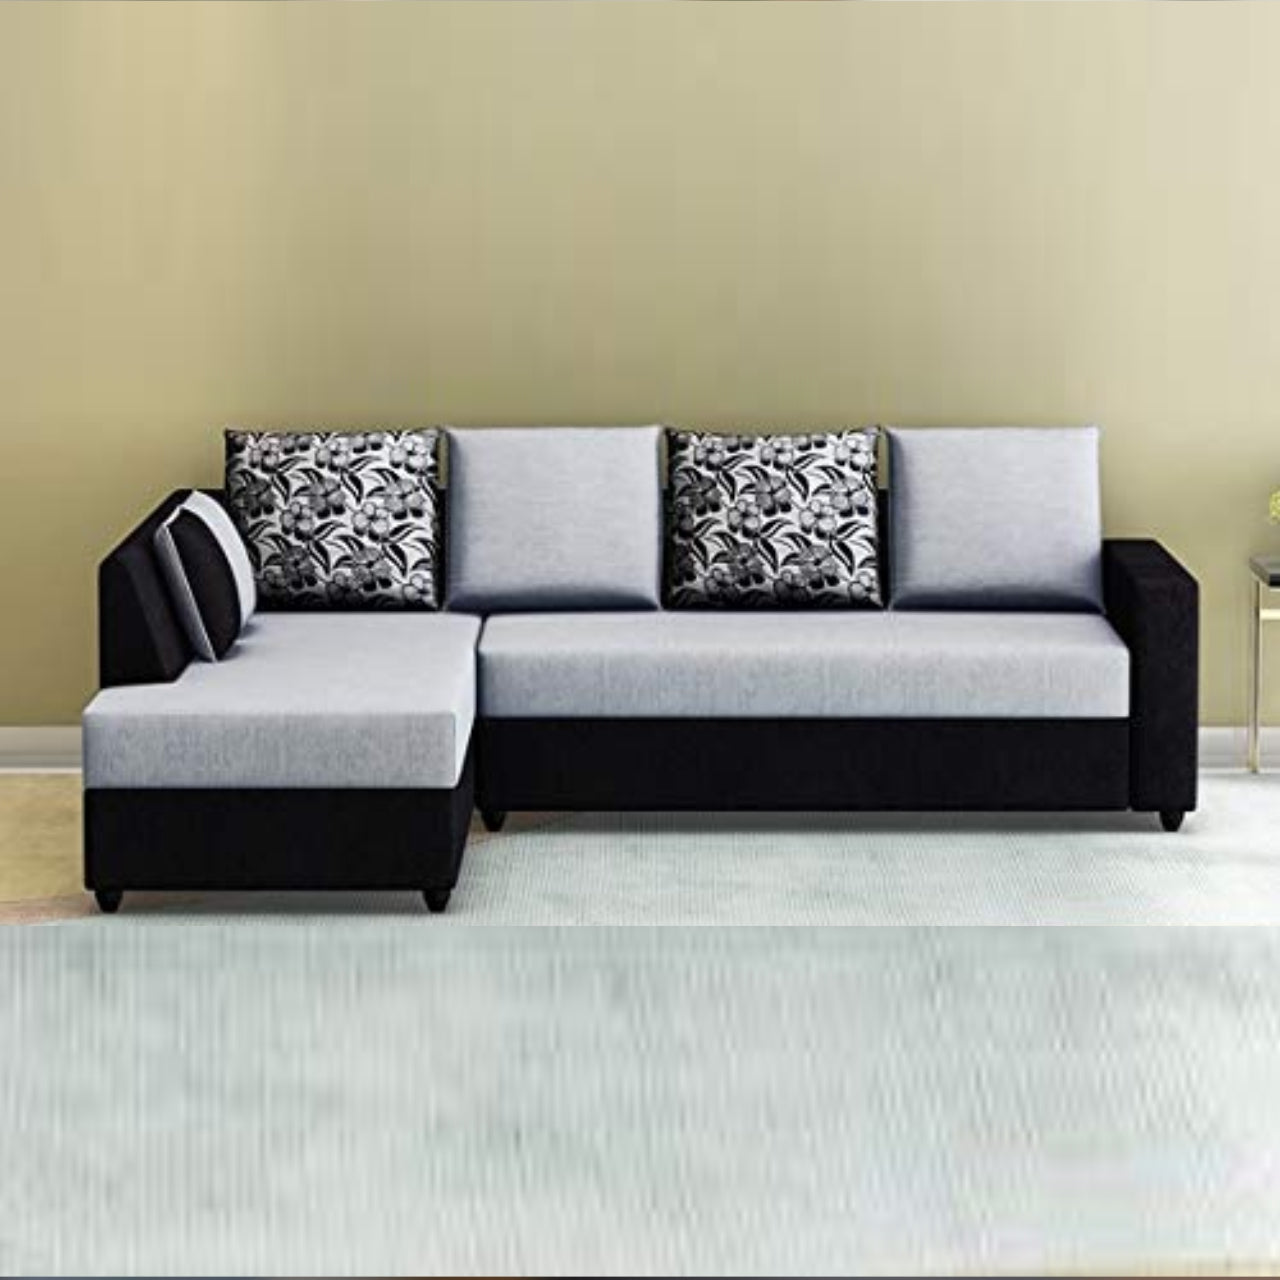 L Shape Sofa Set:- Munix Sectional Fabric Sofa Set - RHS  (Grey & Black)